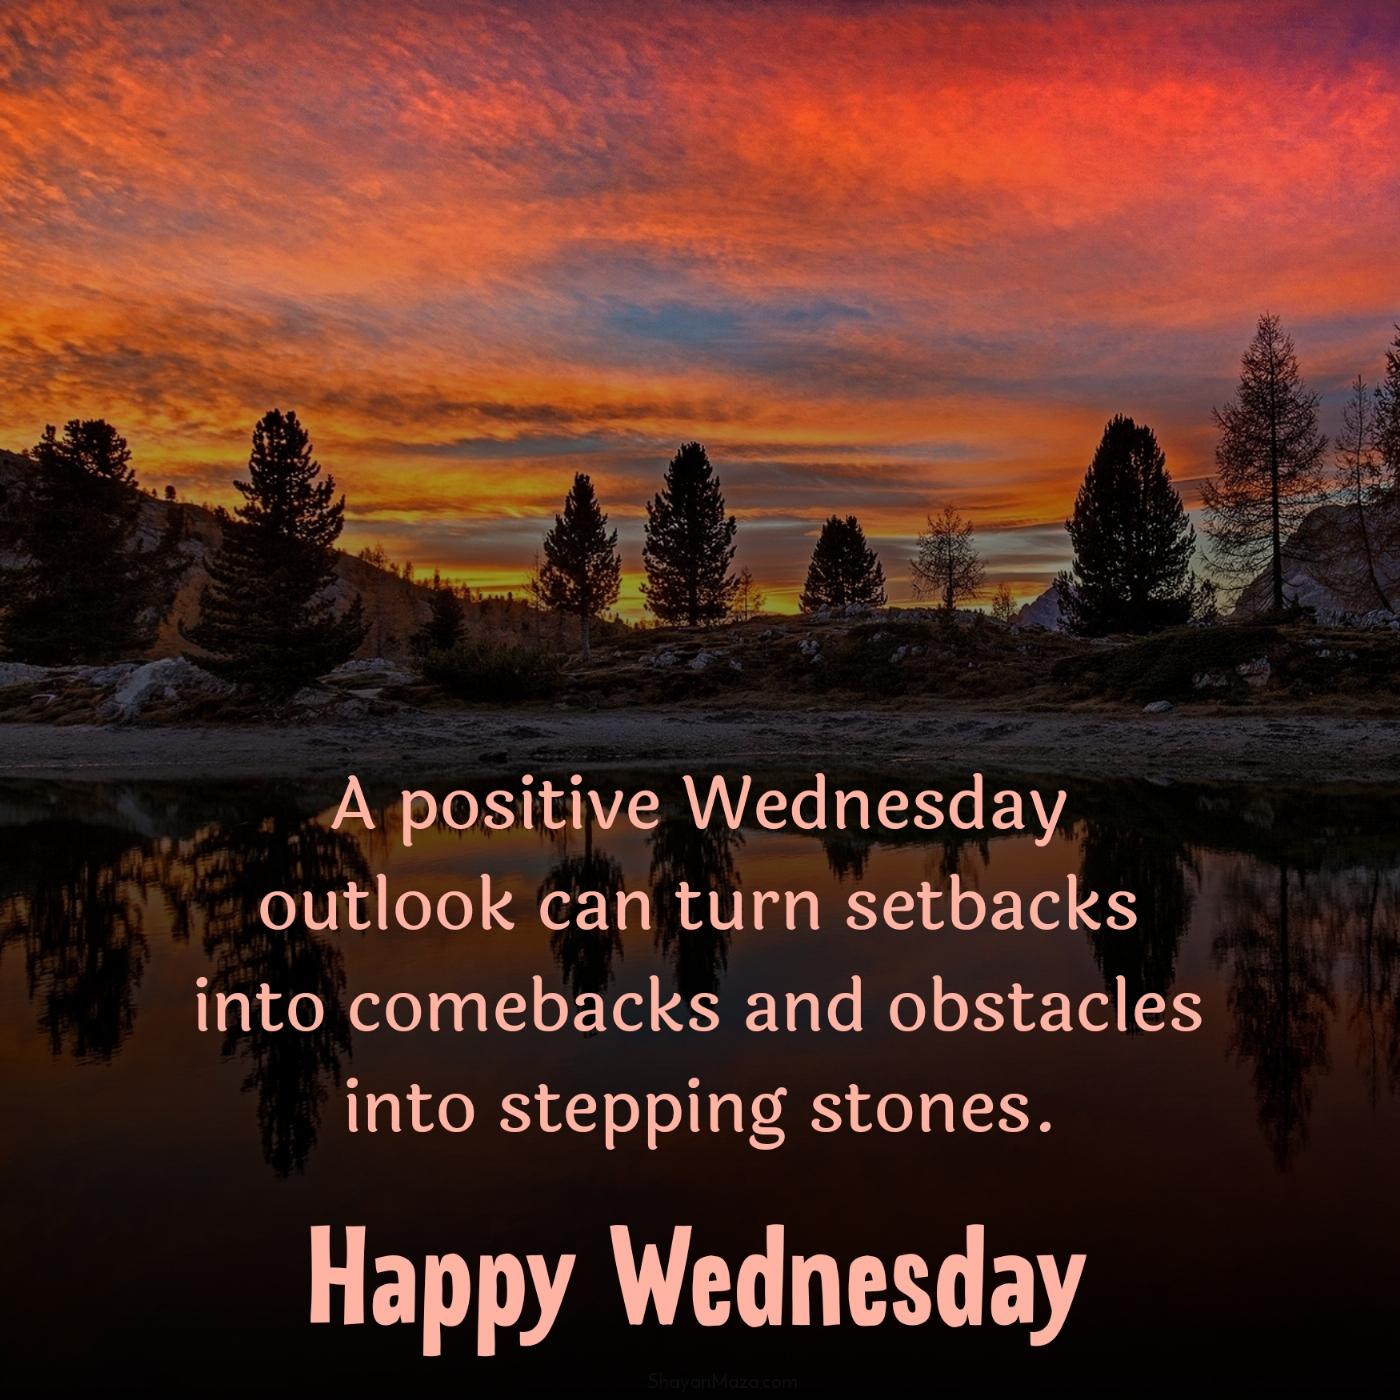 A positive Wednesday outlook can turn setbacks into comebacks